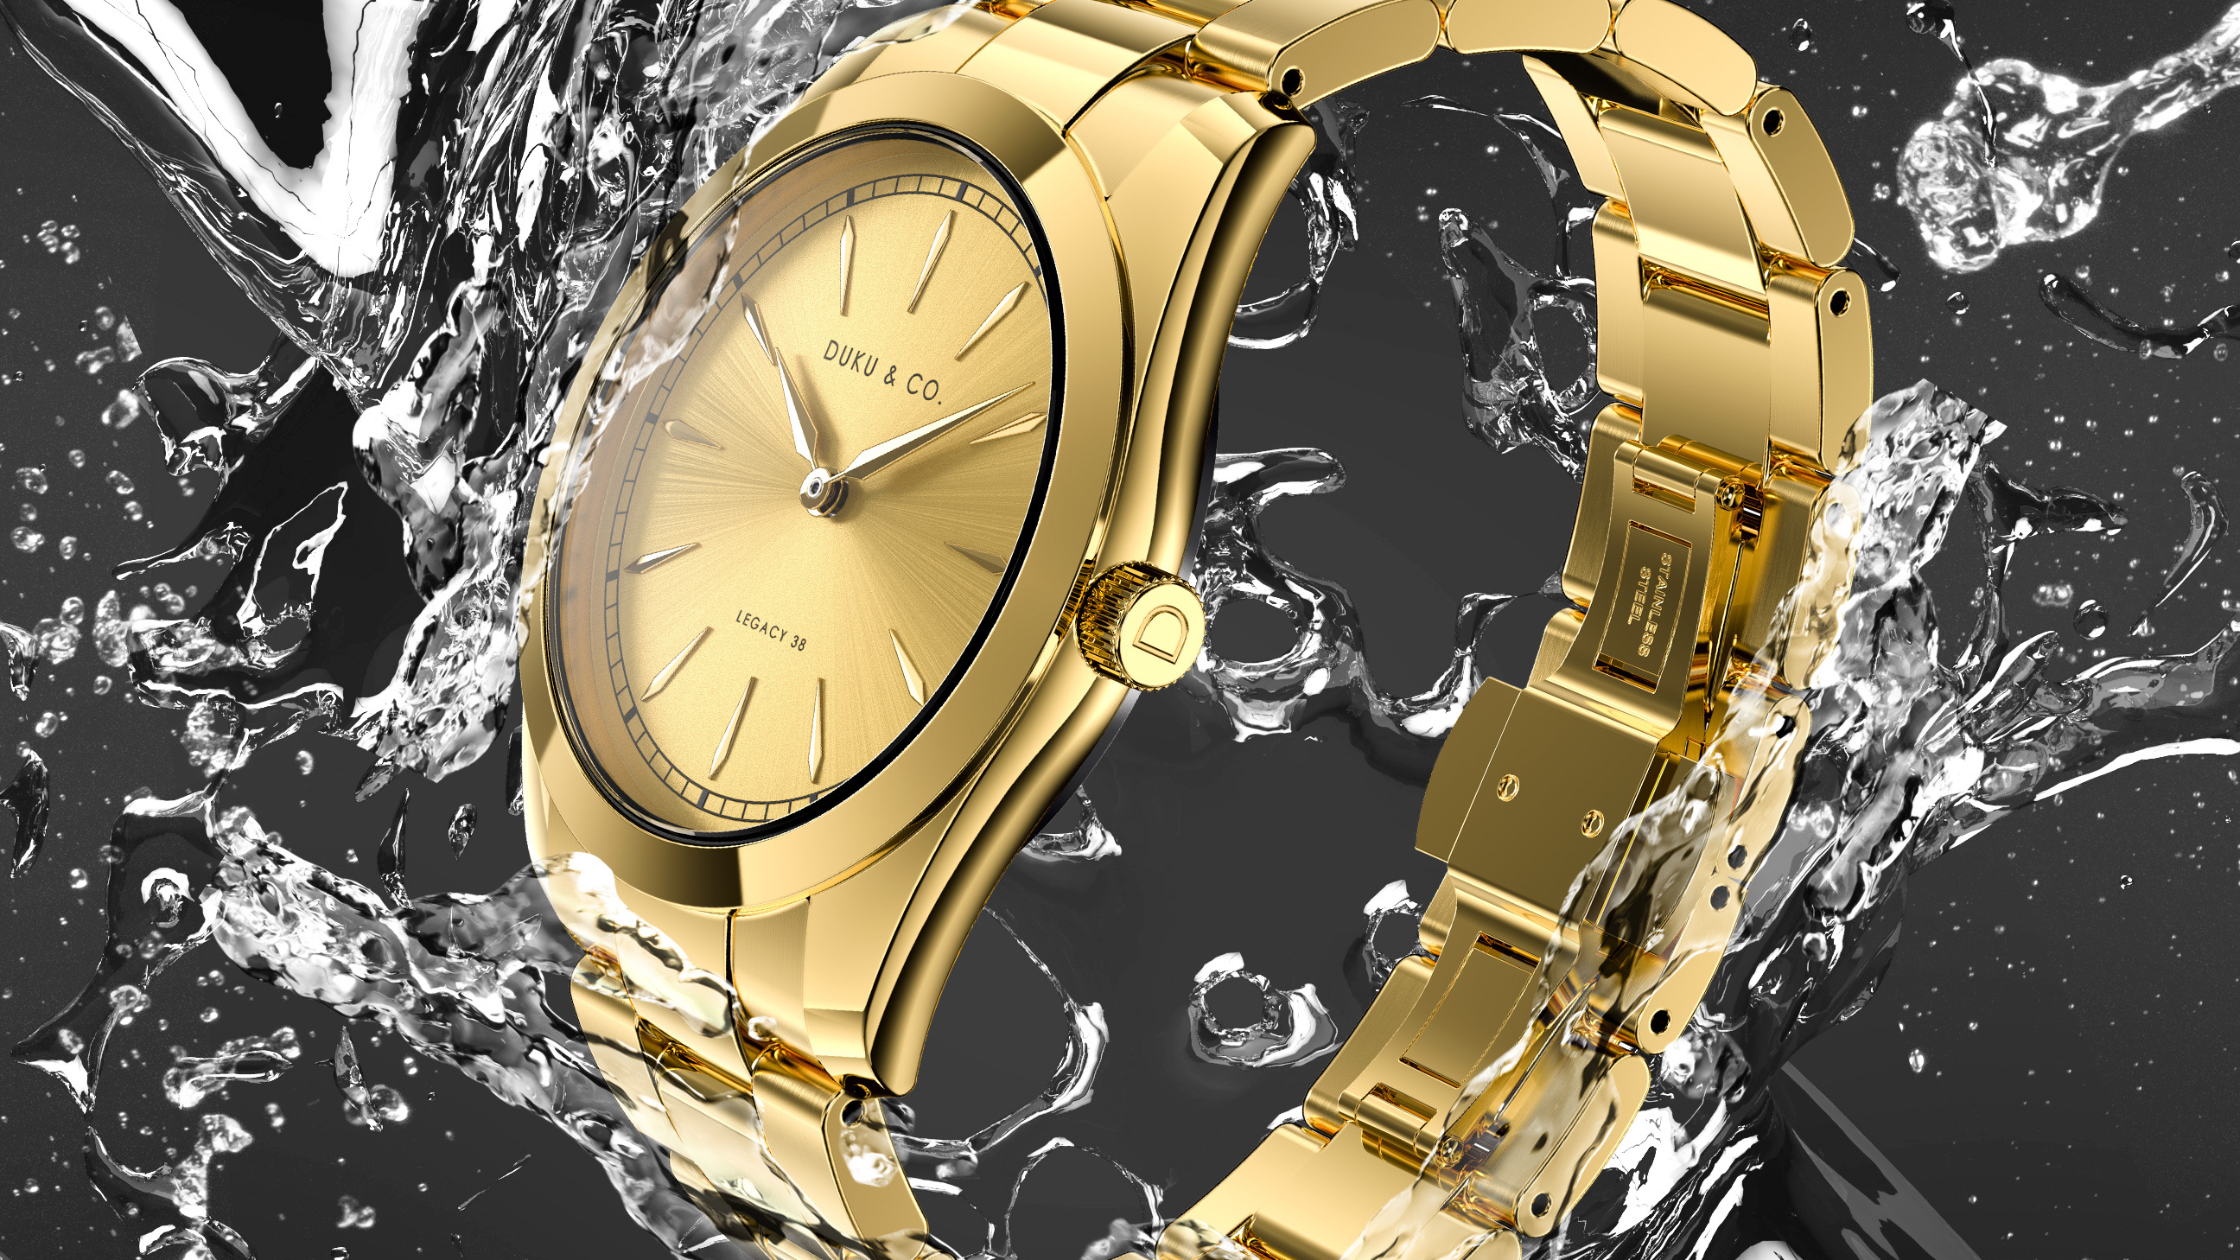 Gold men's watch from Duku & Co.